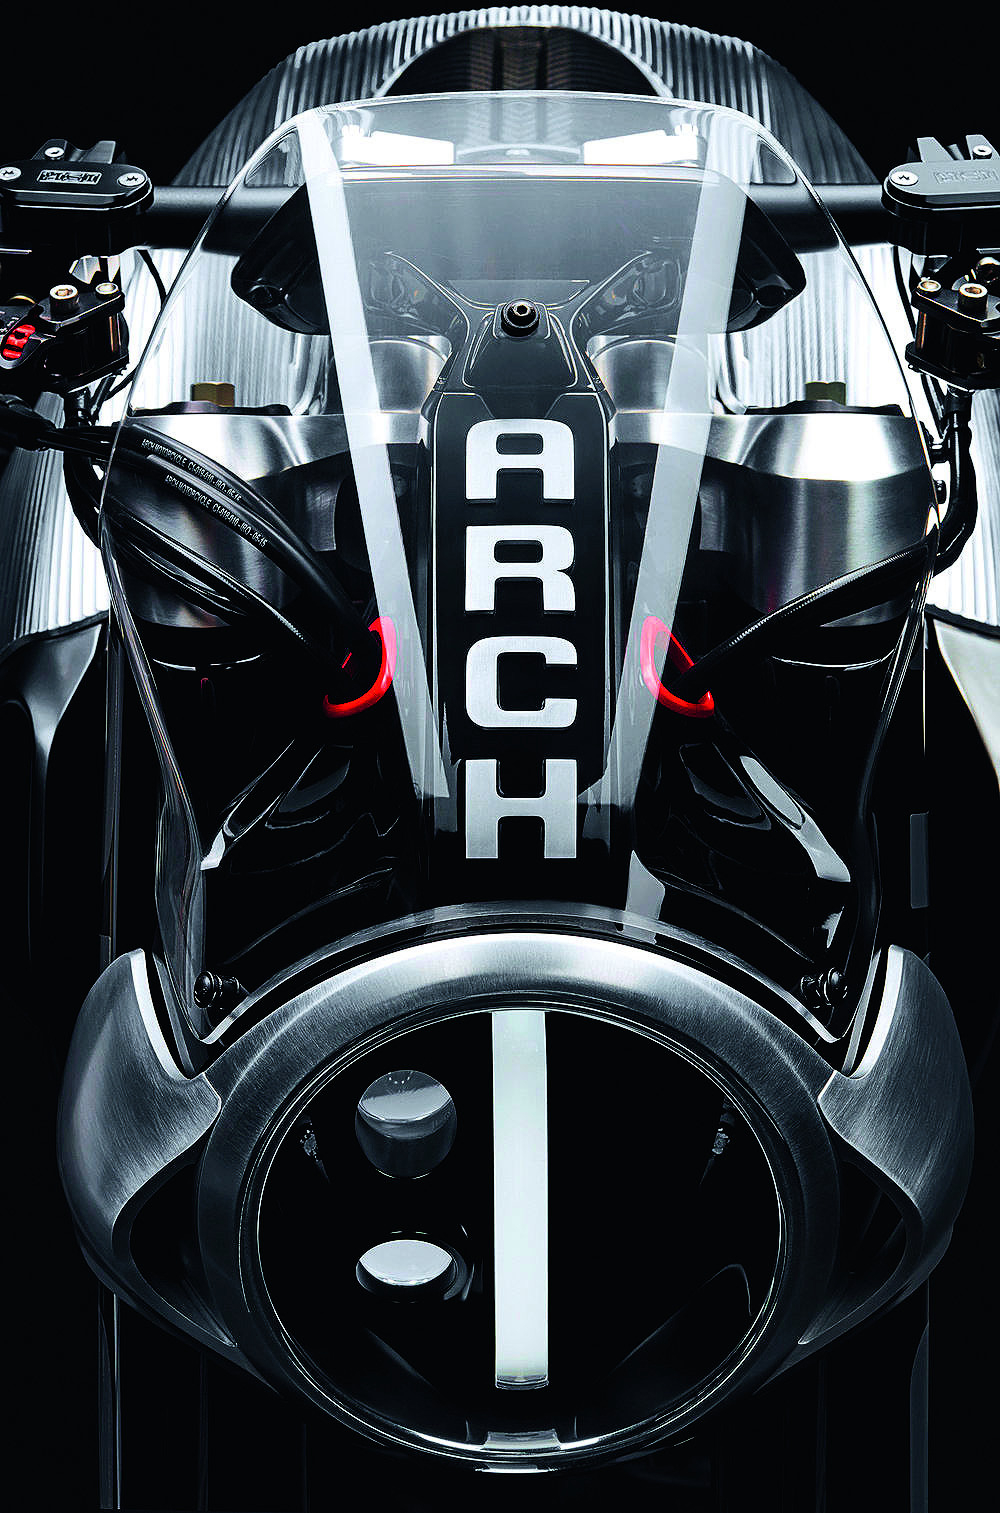 Keanu Reeves sunar: Arch Motorcycle